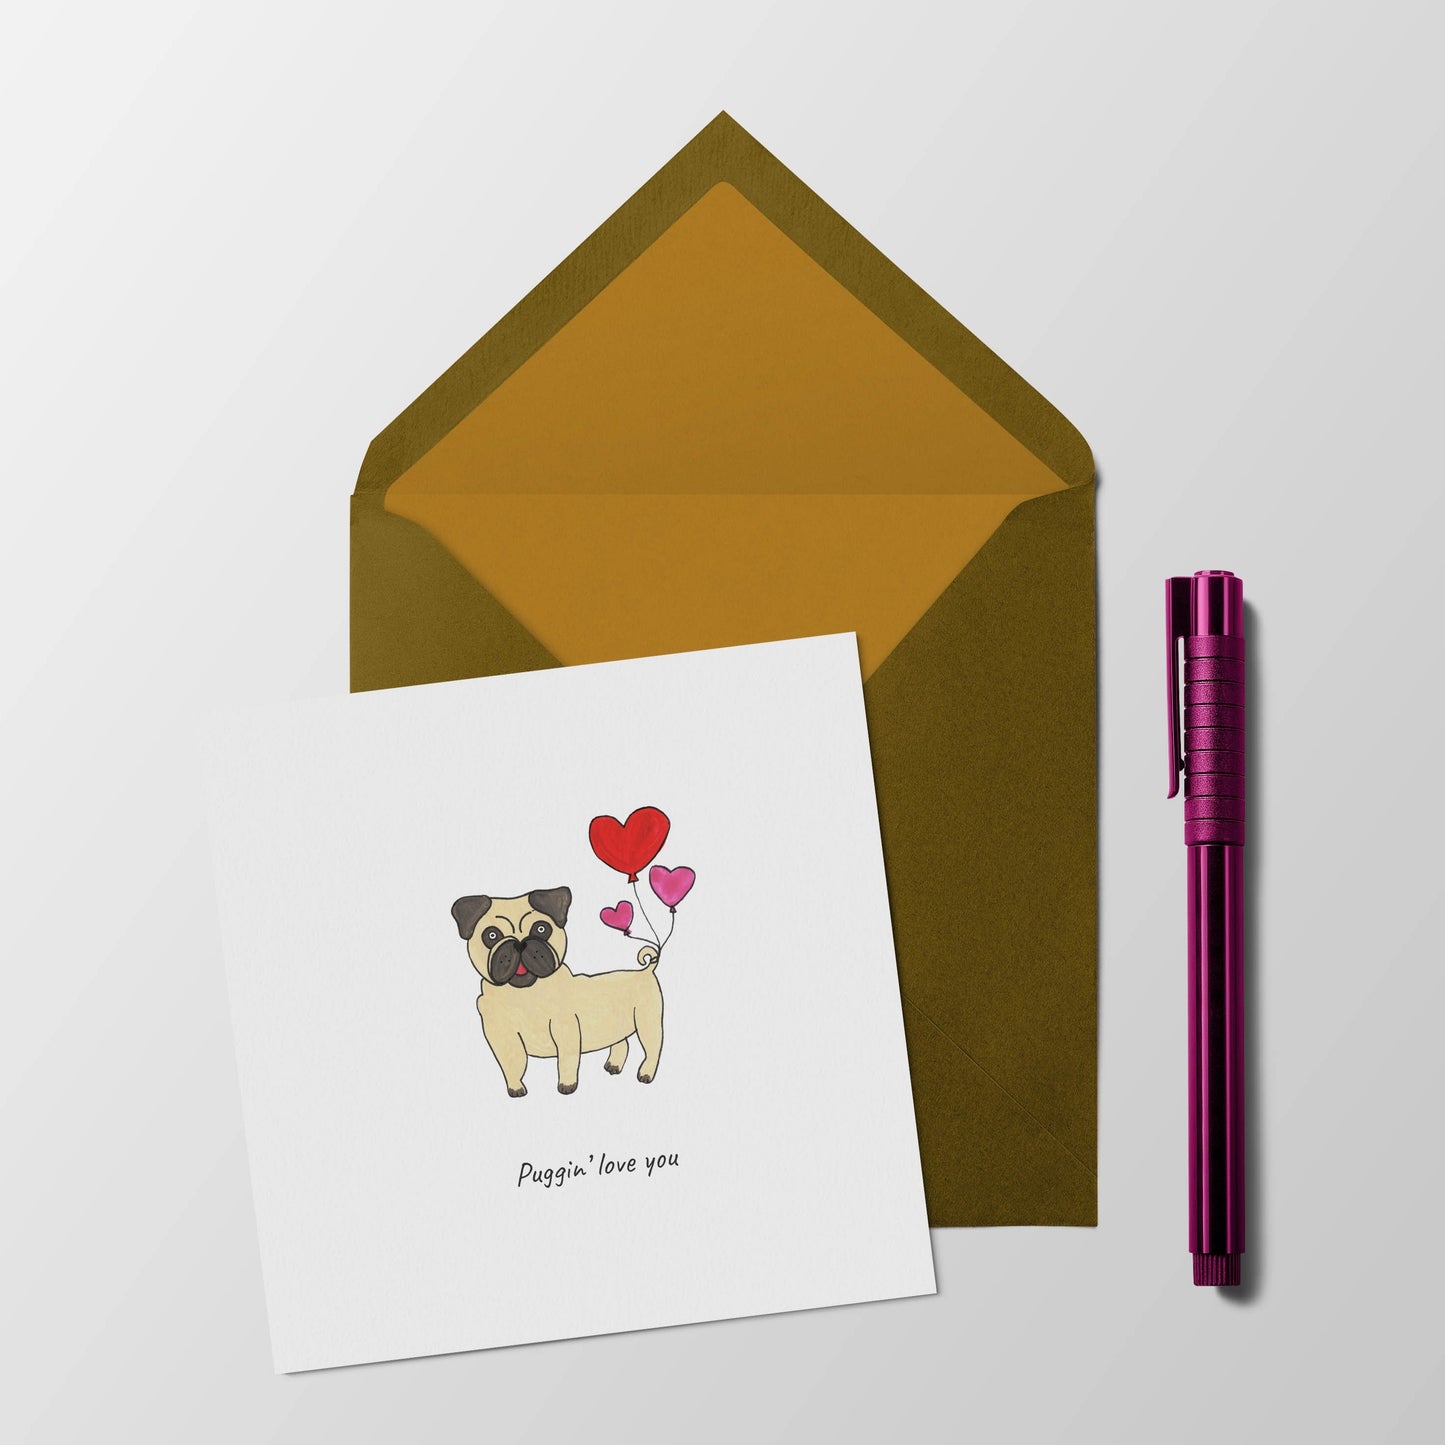 Puggin' love you anniversary / valentines card